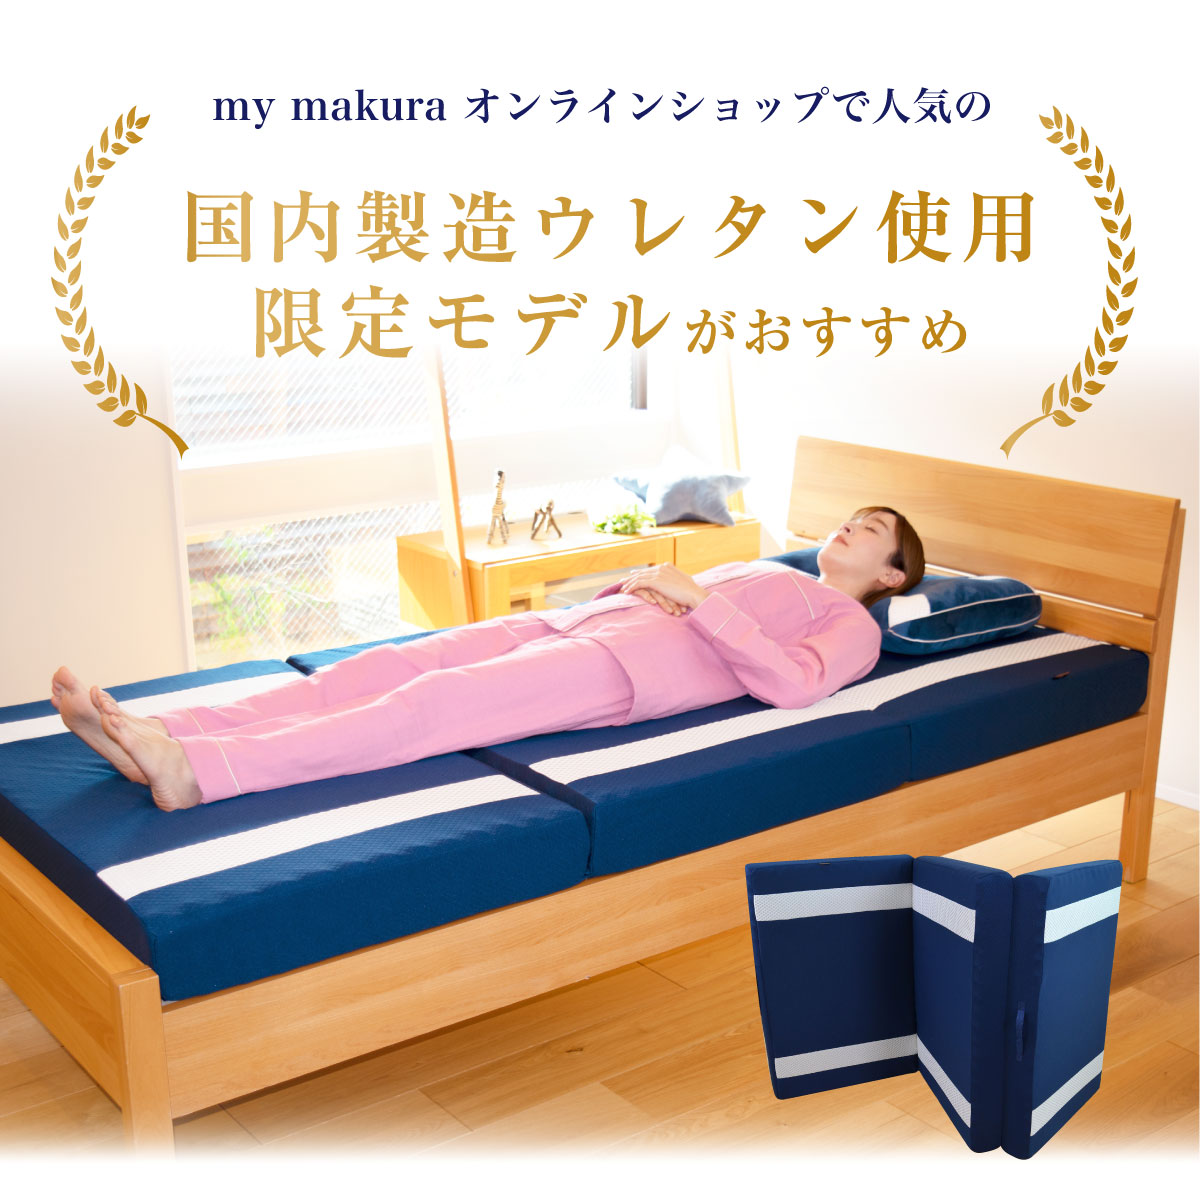 mymakuraオンラインショップで人気の国内製造ウレタン使用限定モデルがおすすめ